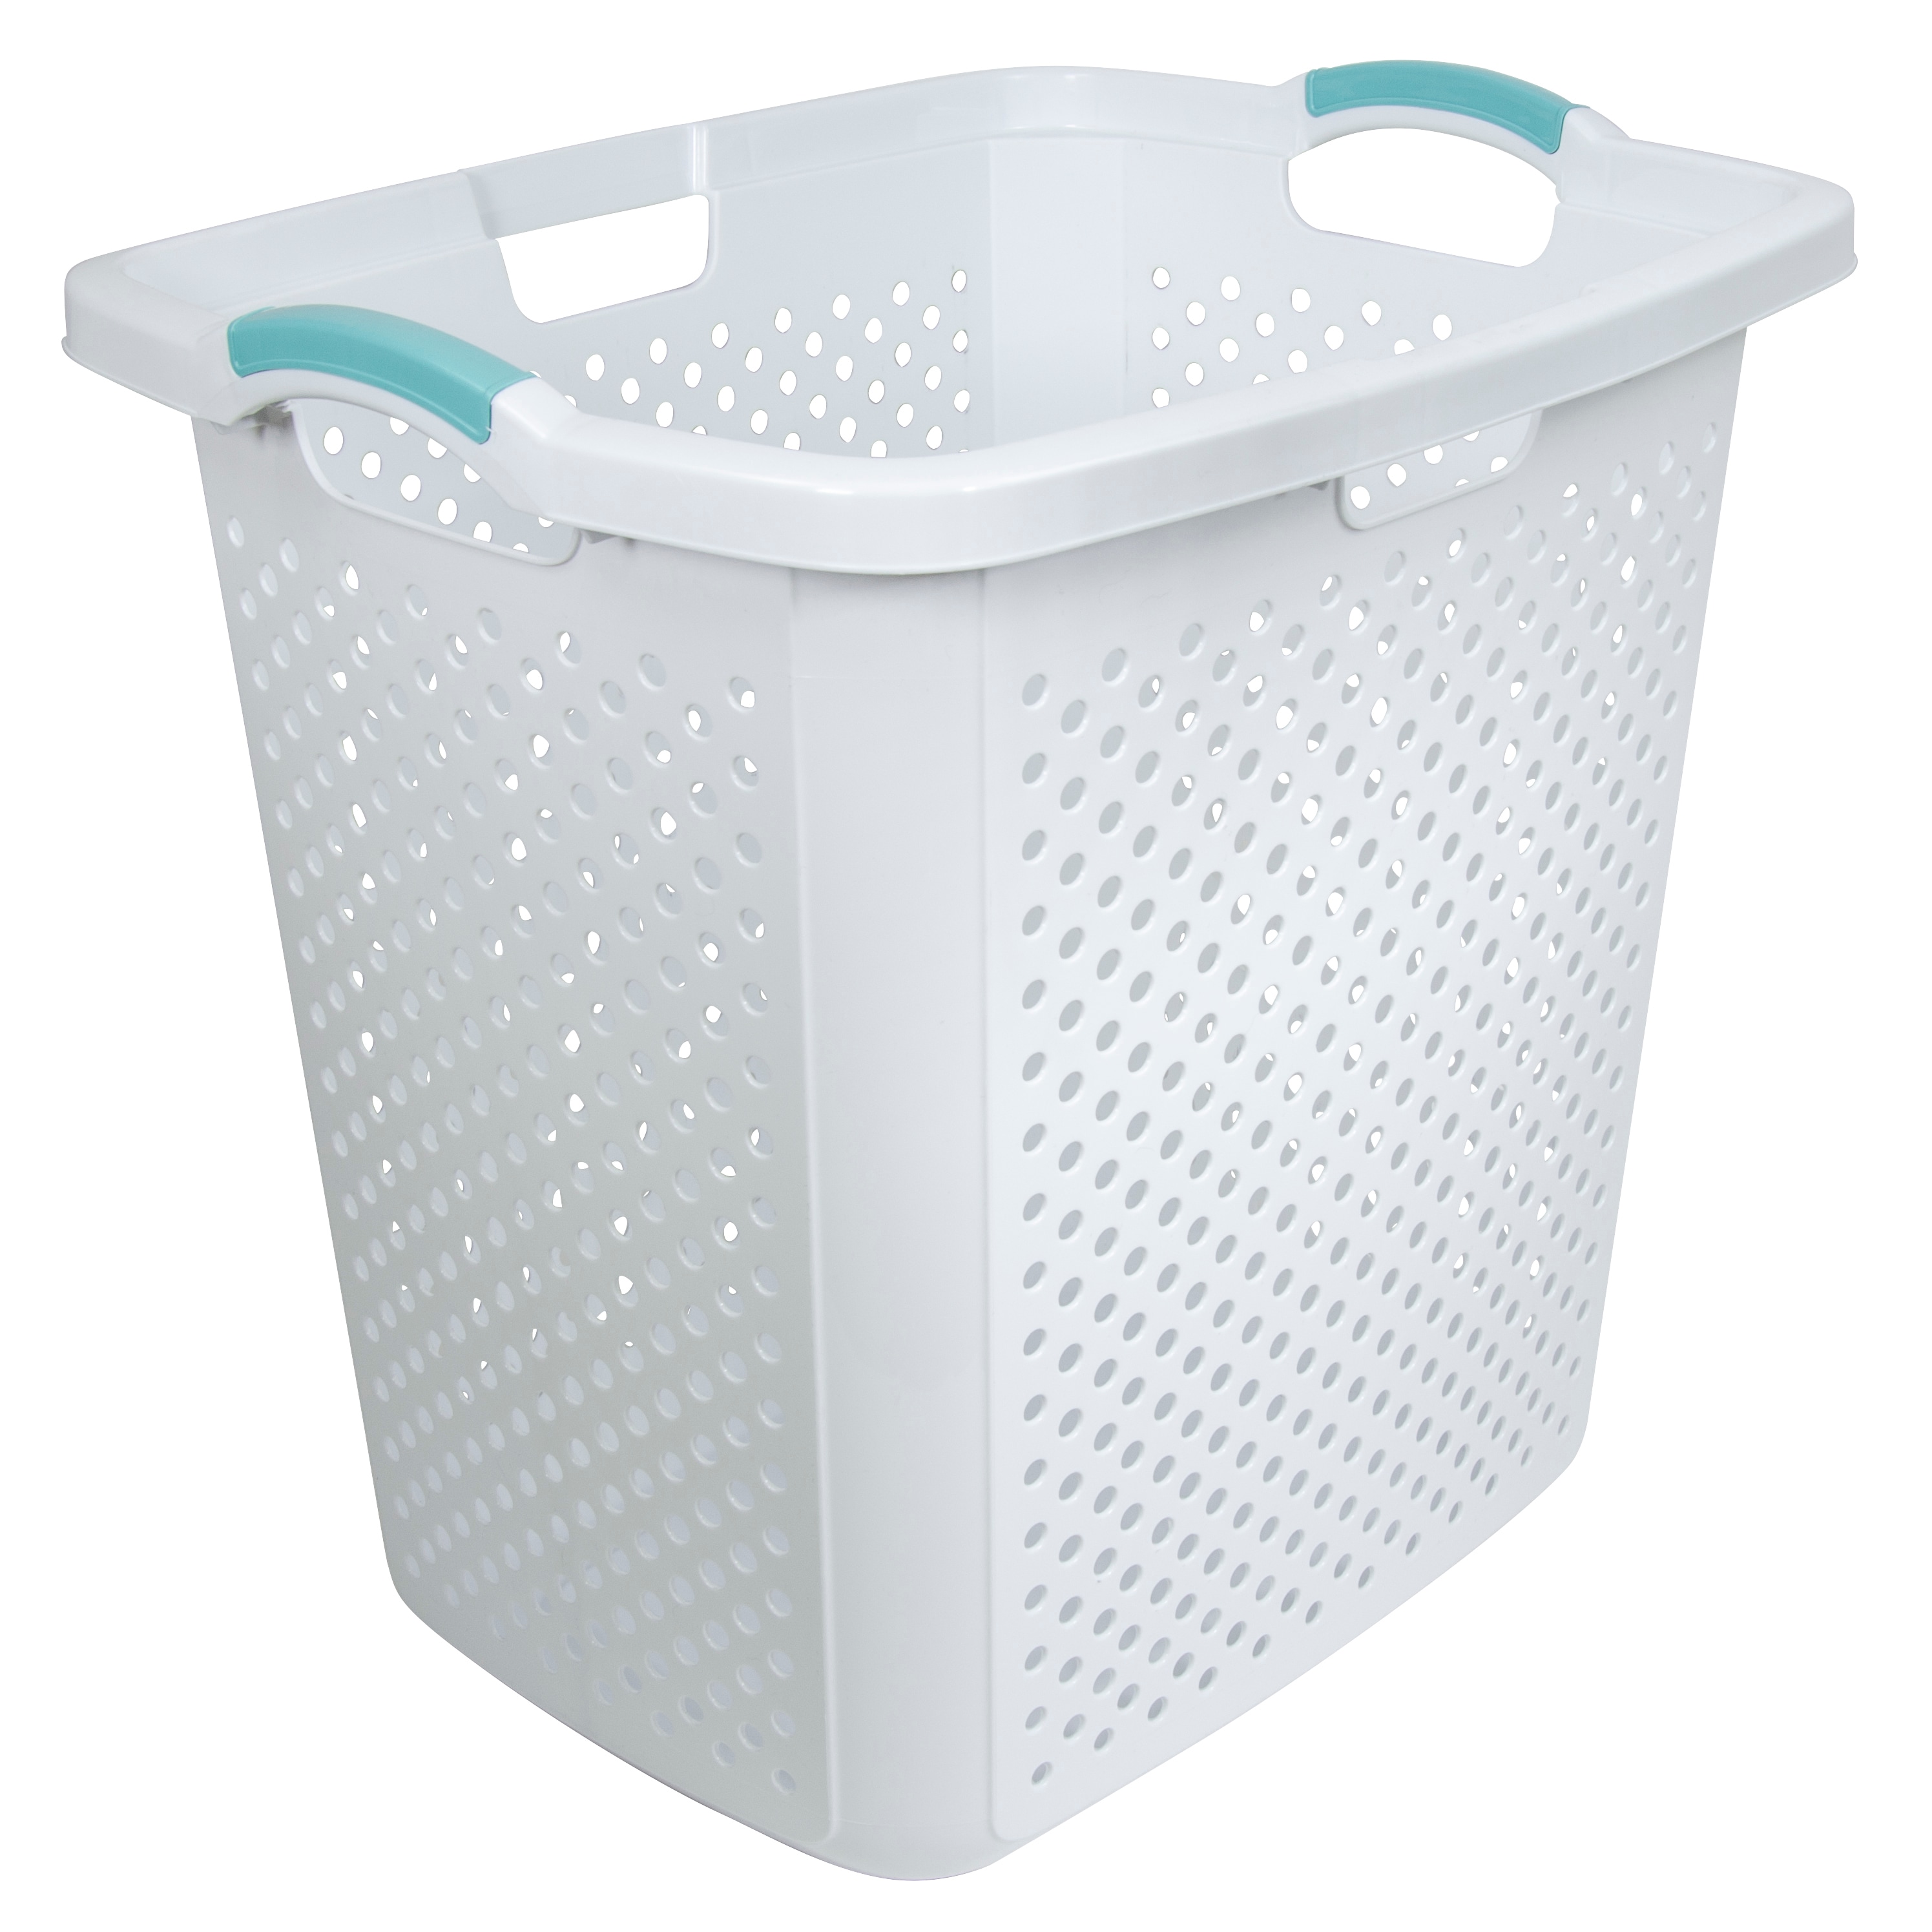 Home Logic 2.5-Bushel Plastic Laundry Hamper in the Laundry